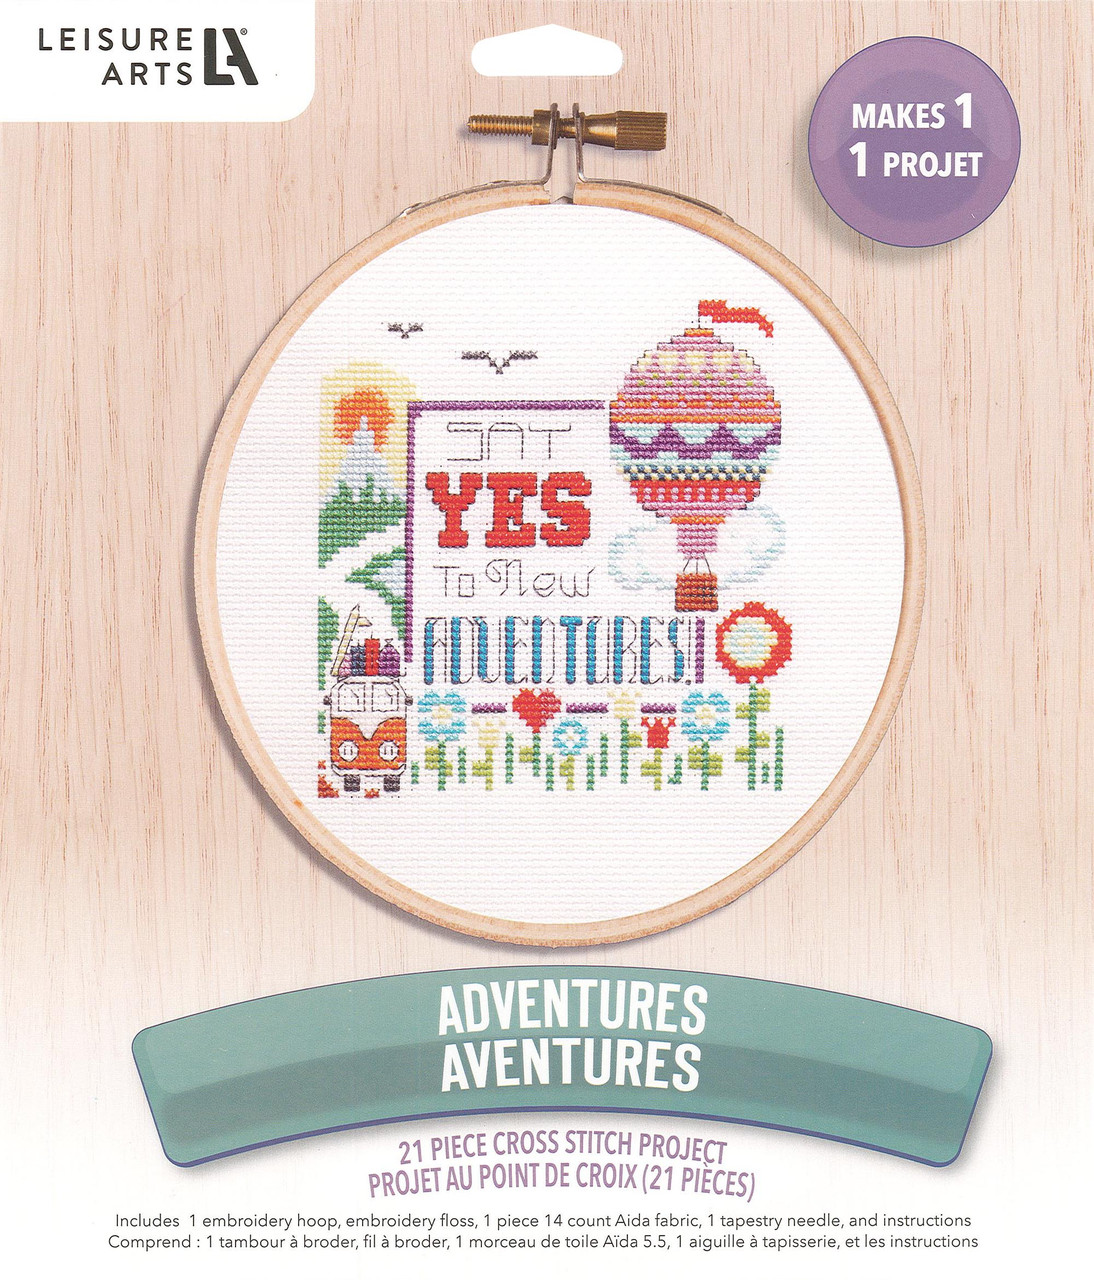 Leisure Arts Embroidery Kit 6 inch Joy - Embroidery Kit for Beginners - Embroidery Kit for Adults - Cross Stitch Kits - Cross Stitch Kits for